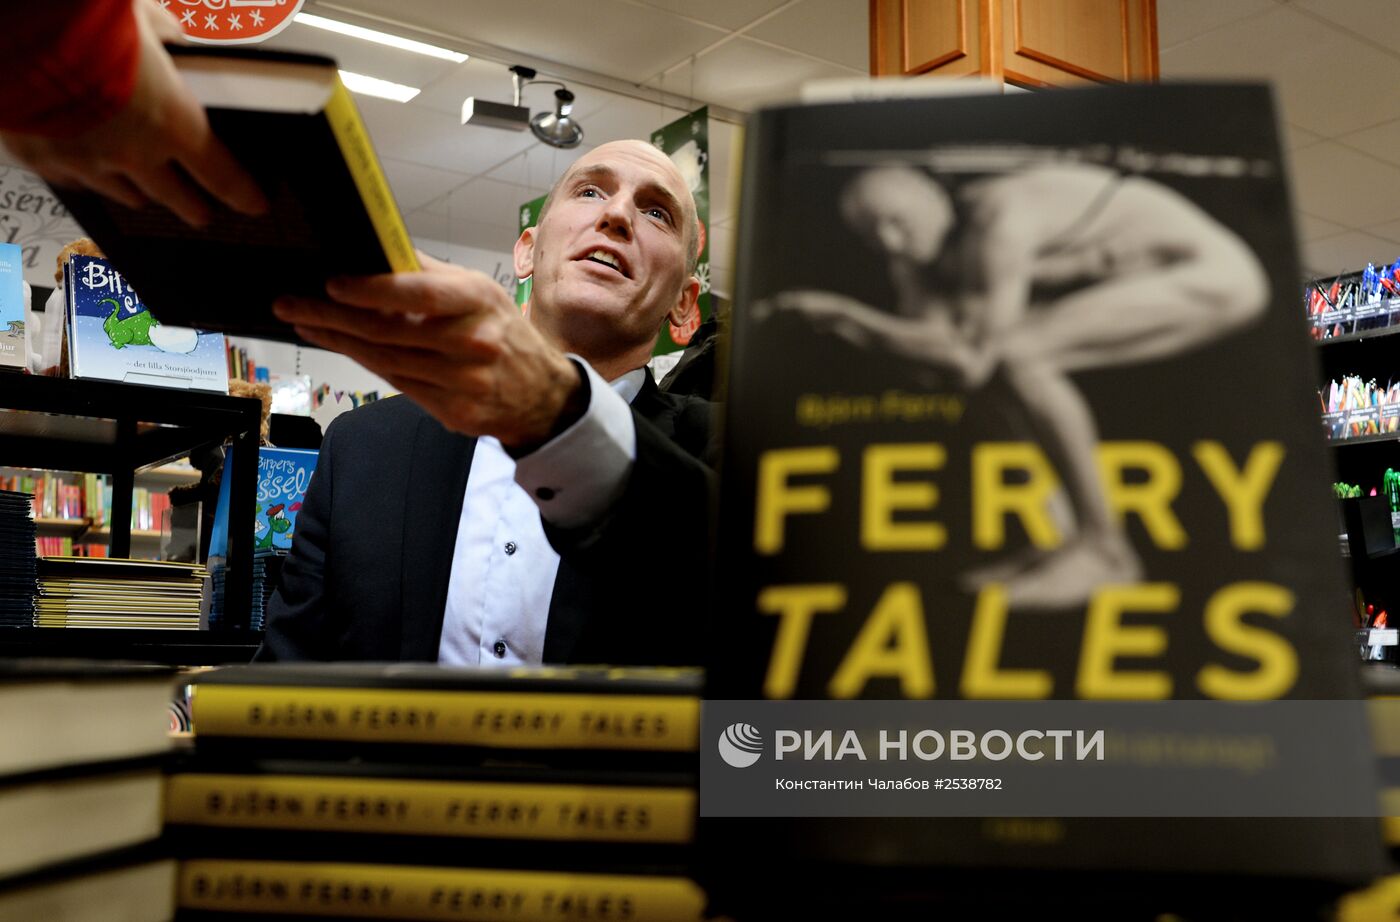 Презентация книги олимпийского чемпиона по биатлону Бьерна Ферри